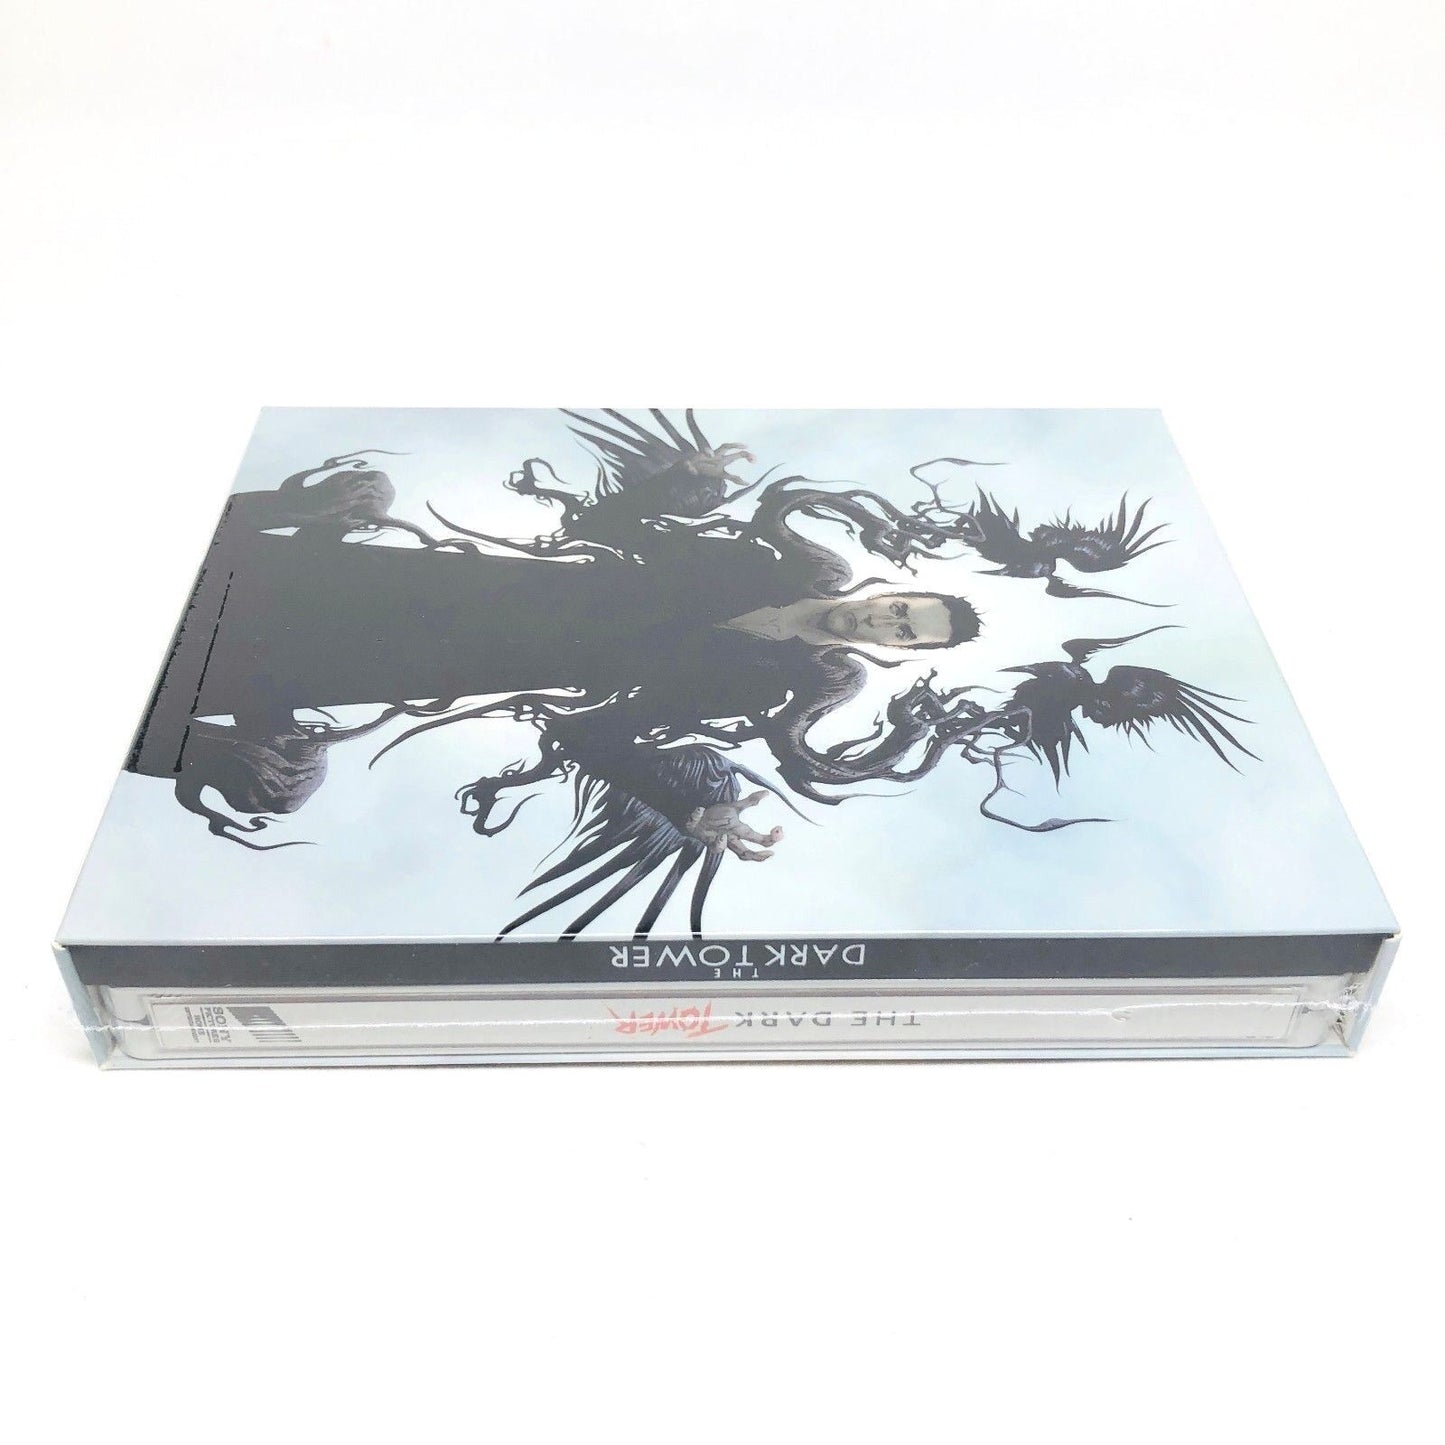 The Dark Tower Blu-ray Steelbook Full Slip HDzeta Silver Label